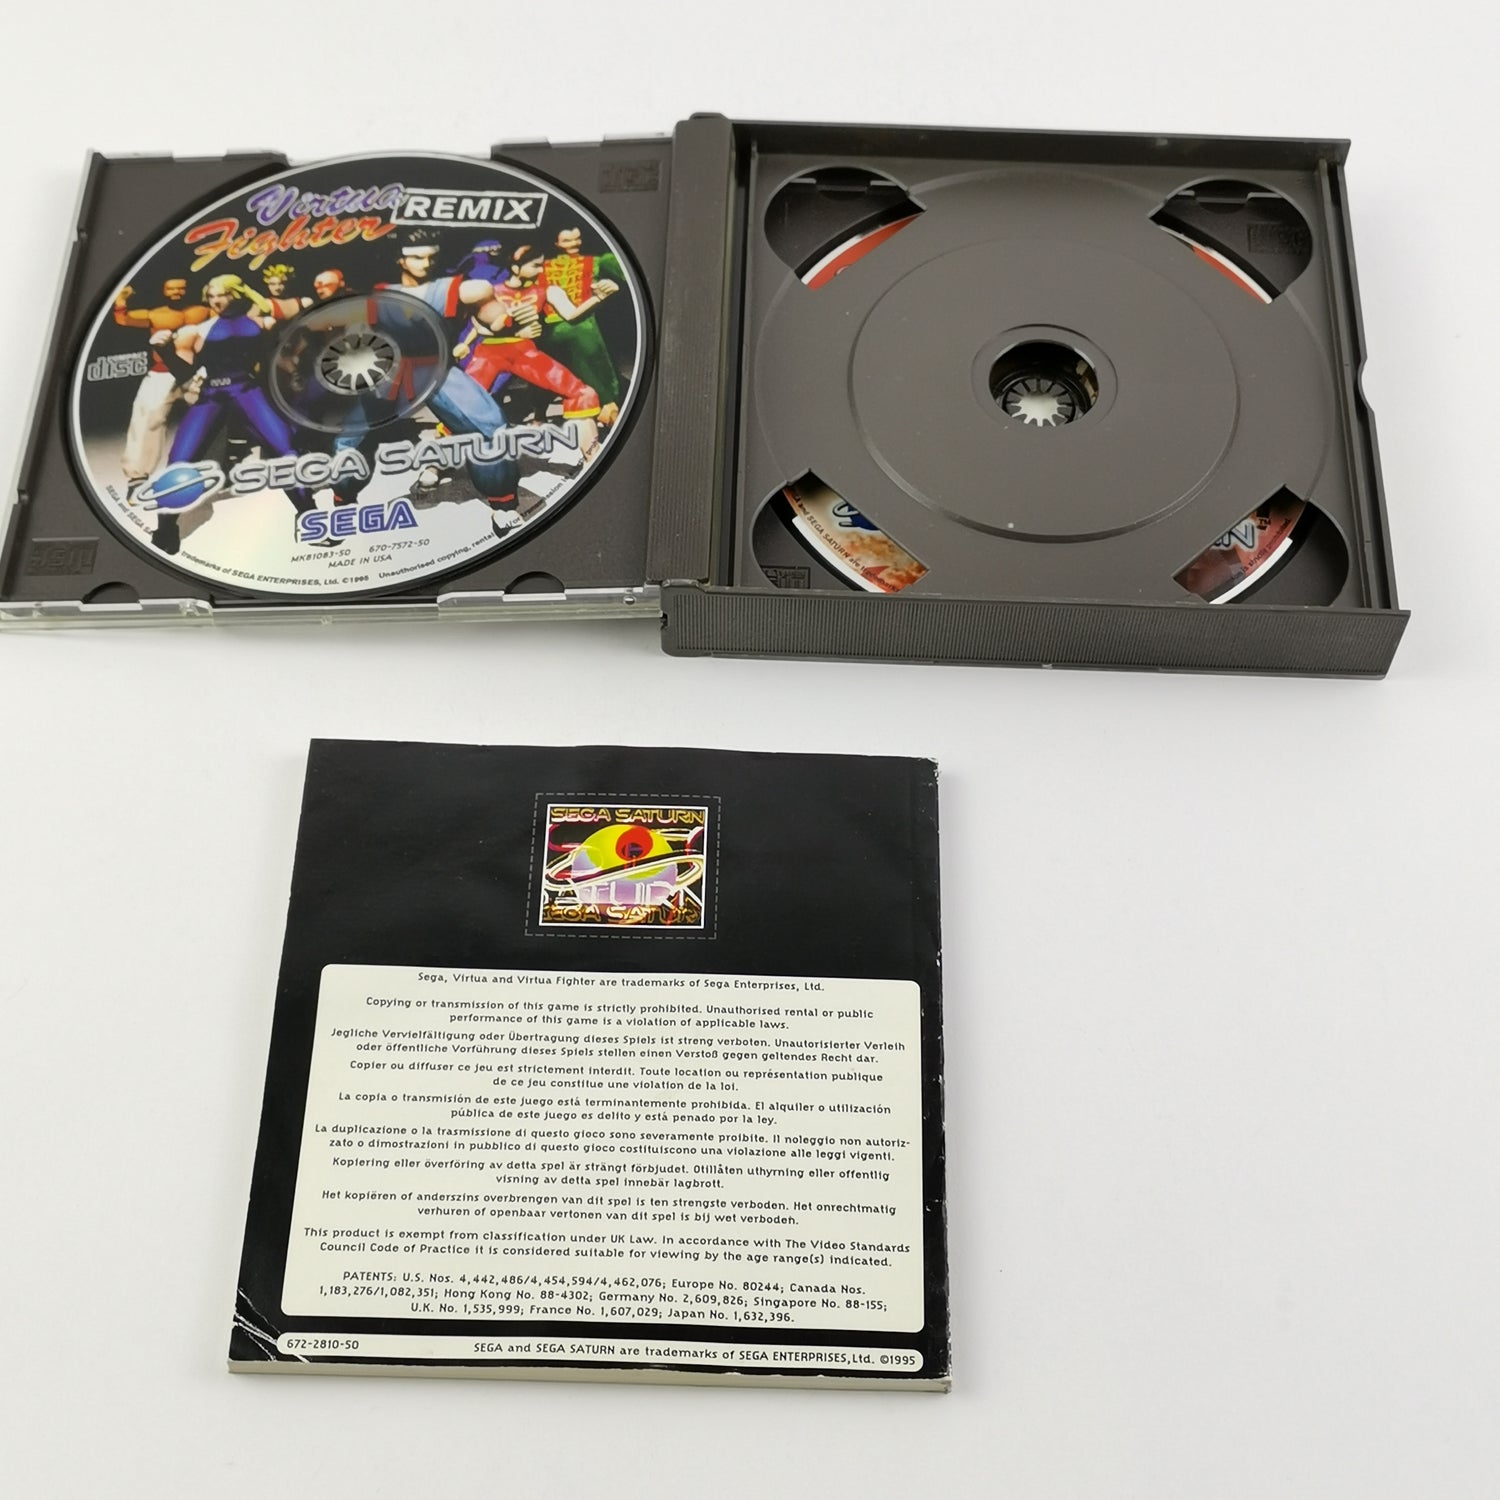 Sega Saturn game: Virtua Fighter Remix incl. Portrait Collection original packaging instructions